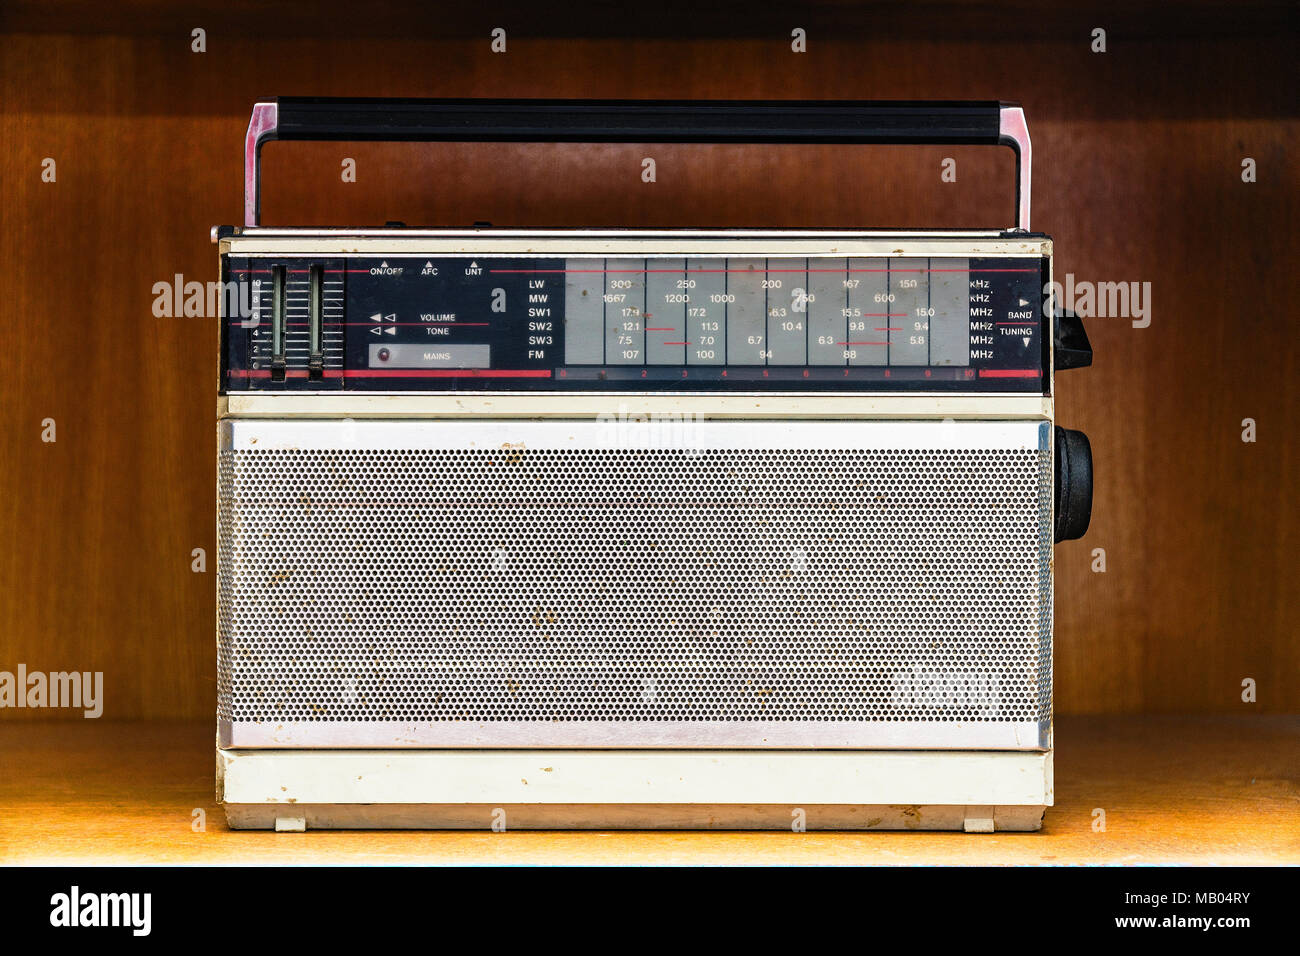 Old vintage dirty analog radio Stock Photo - Alamy